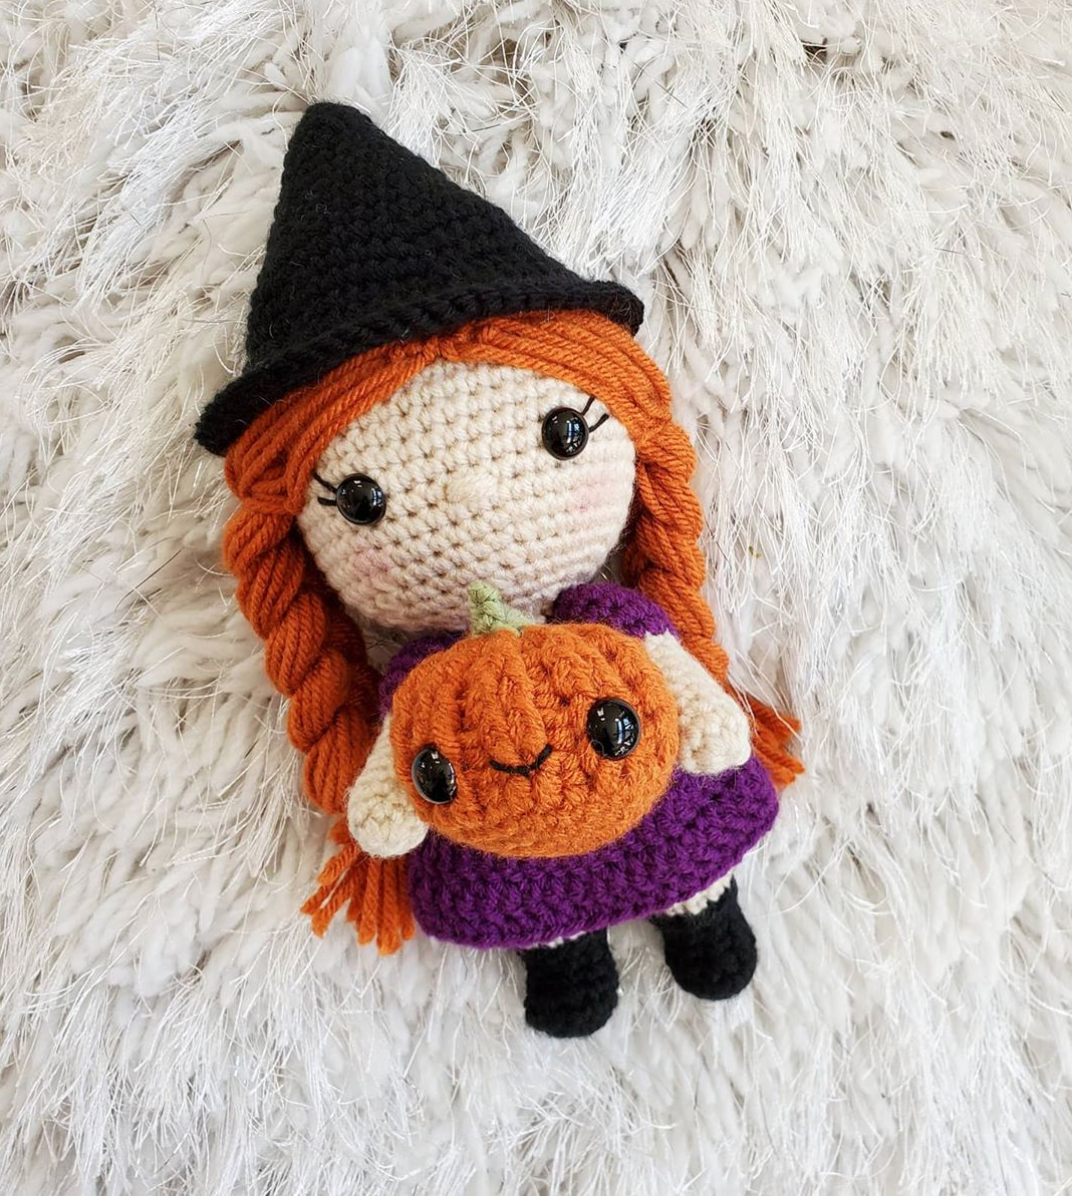 Smitten Crochet creates nursery decor, stuffies and more for littles.